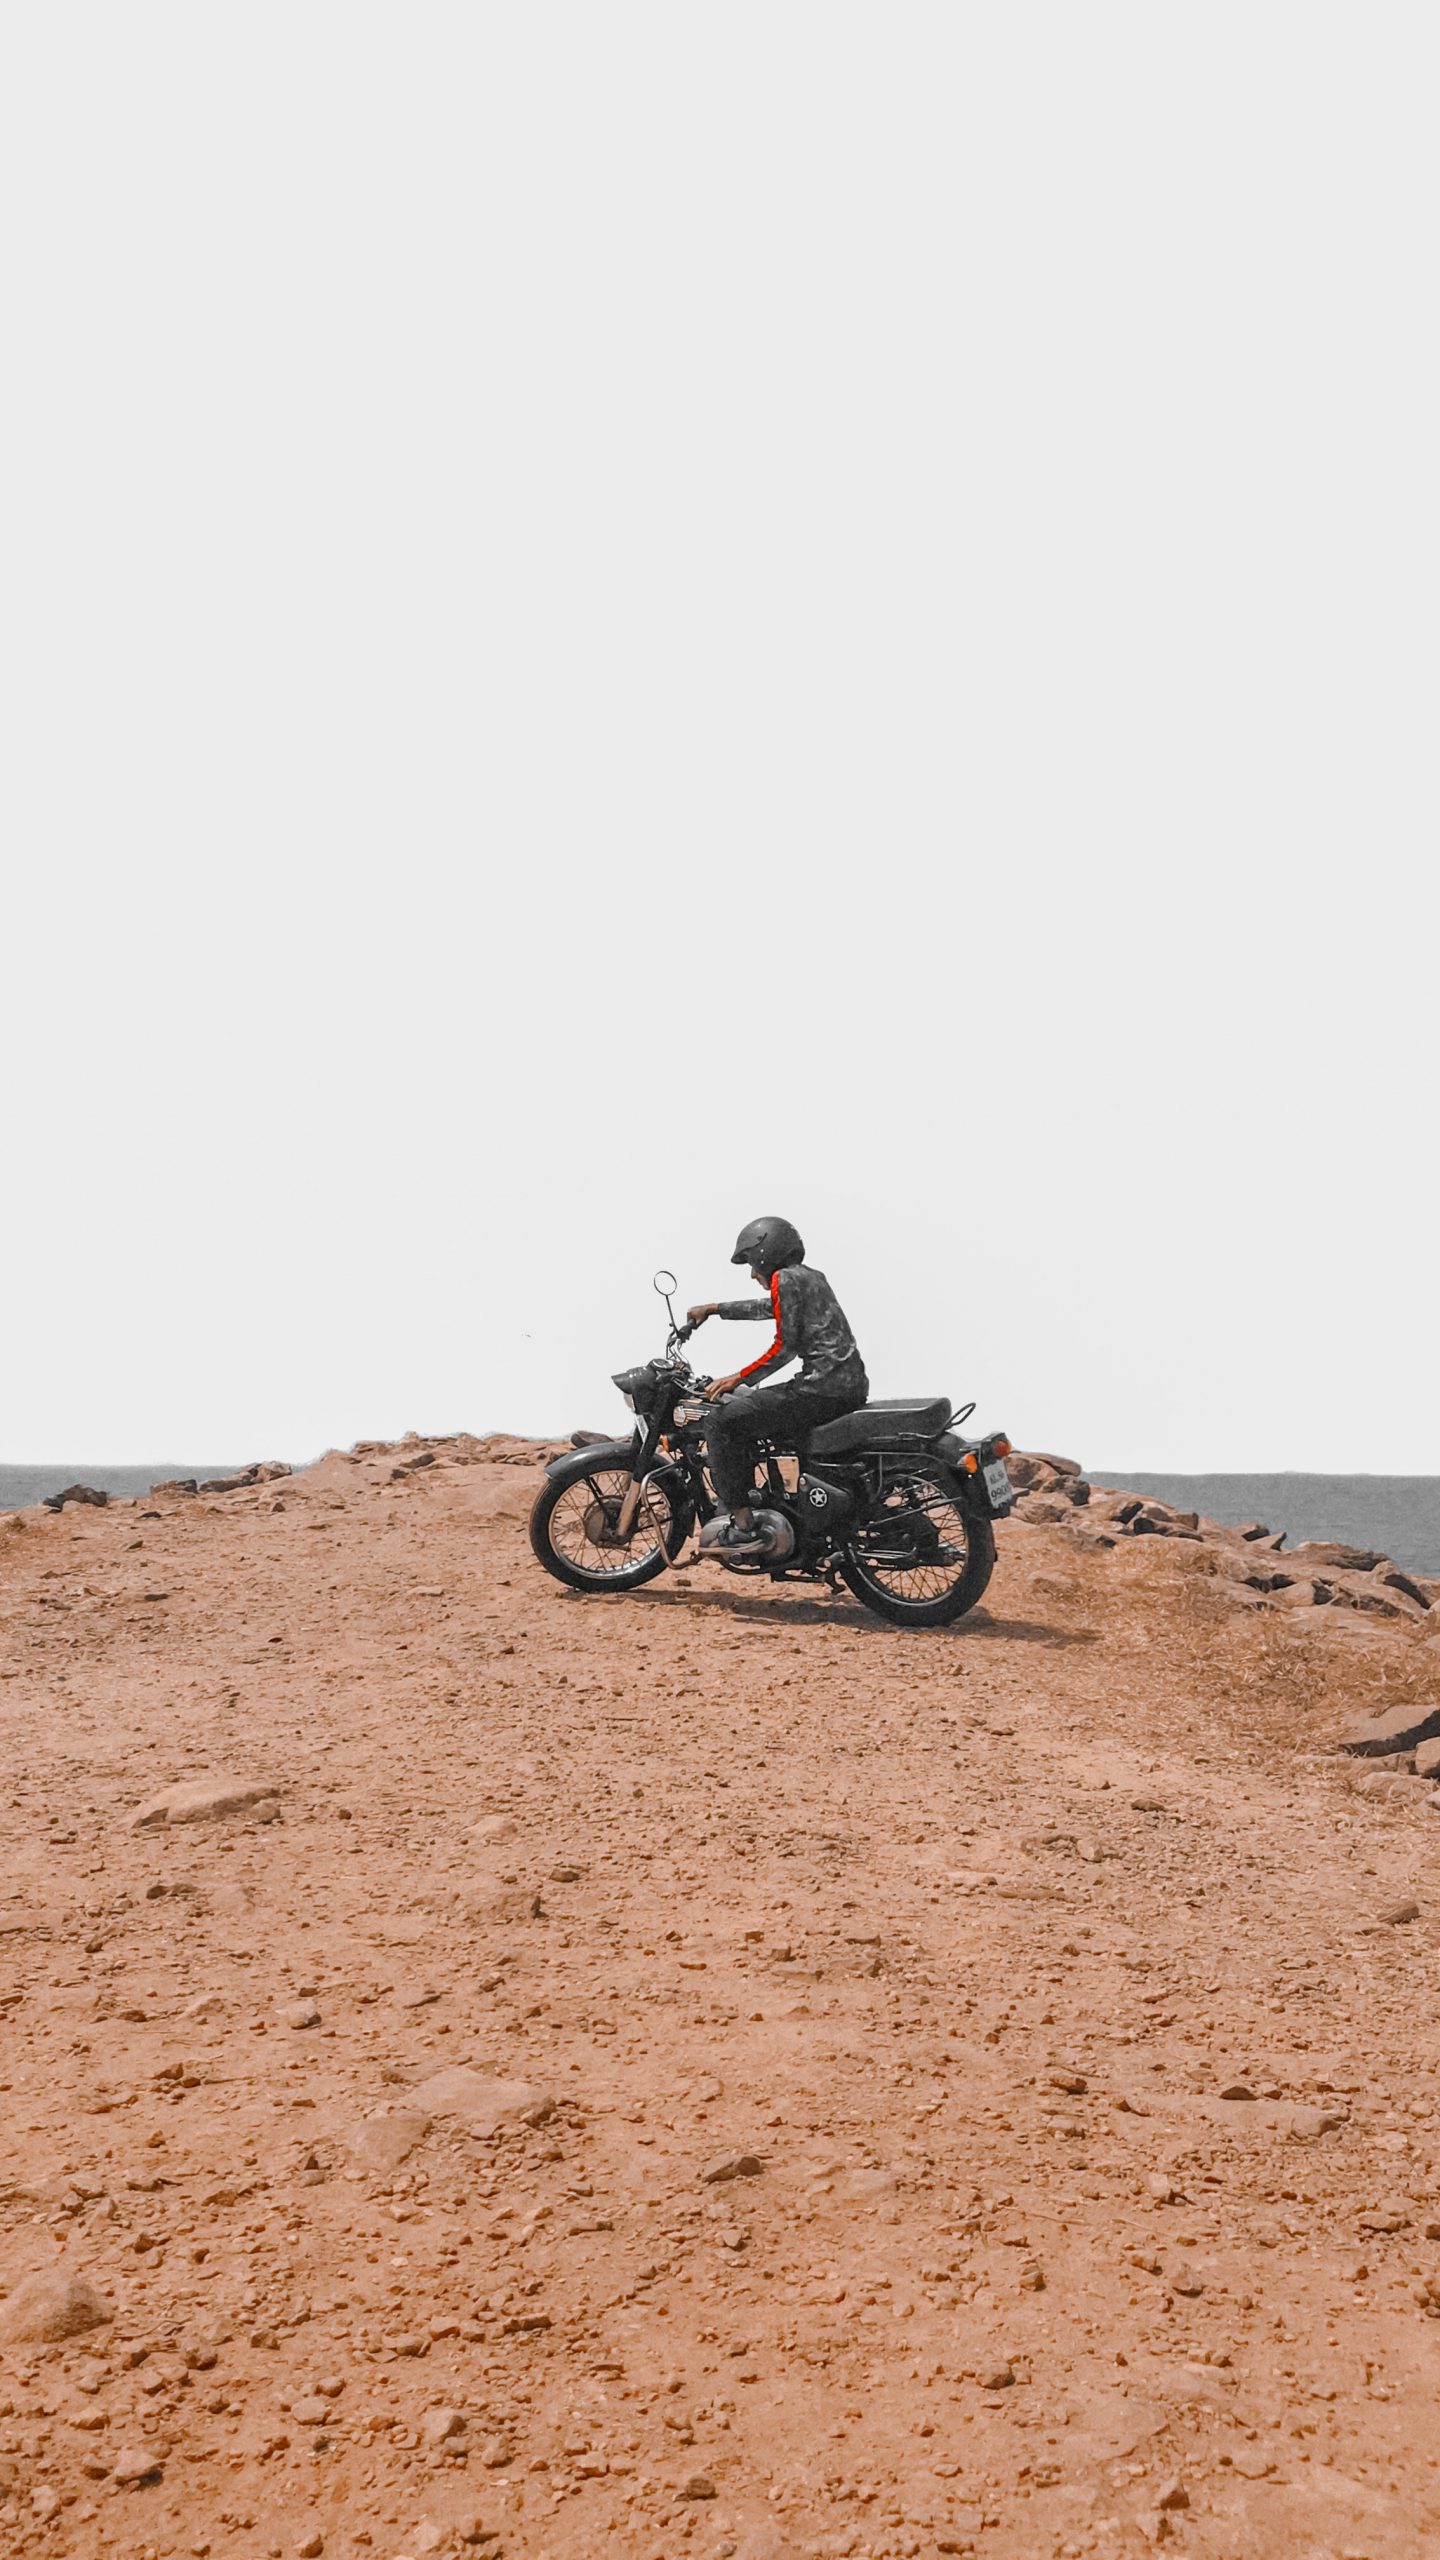 A biker on mountain top